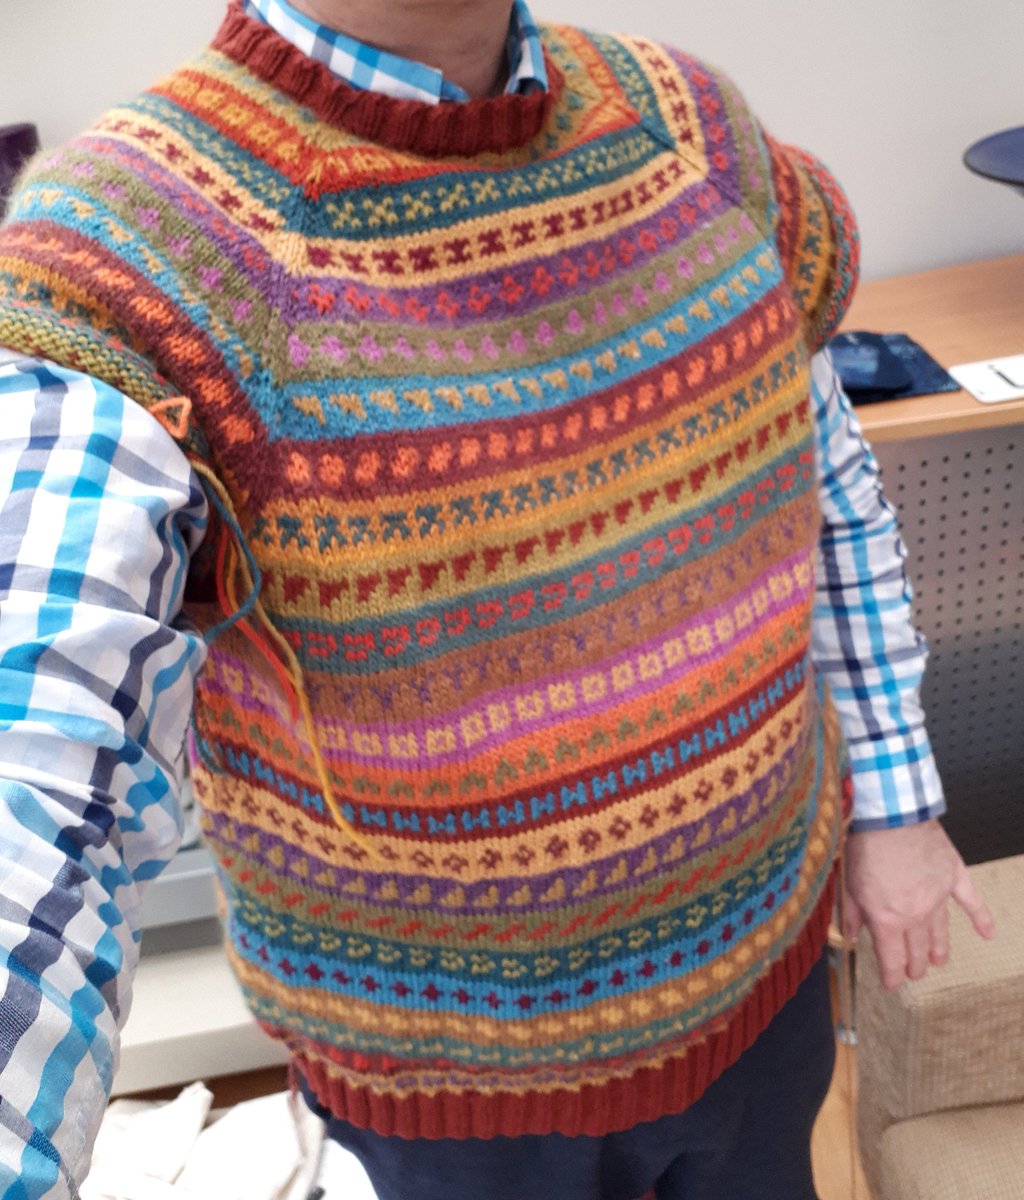 Jumper progress
#knitting 
#fairisleknitting